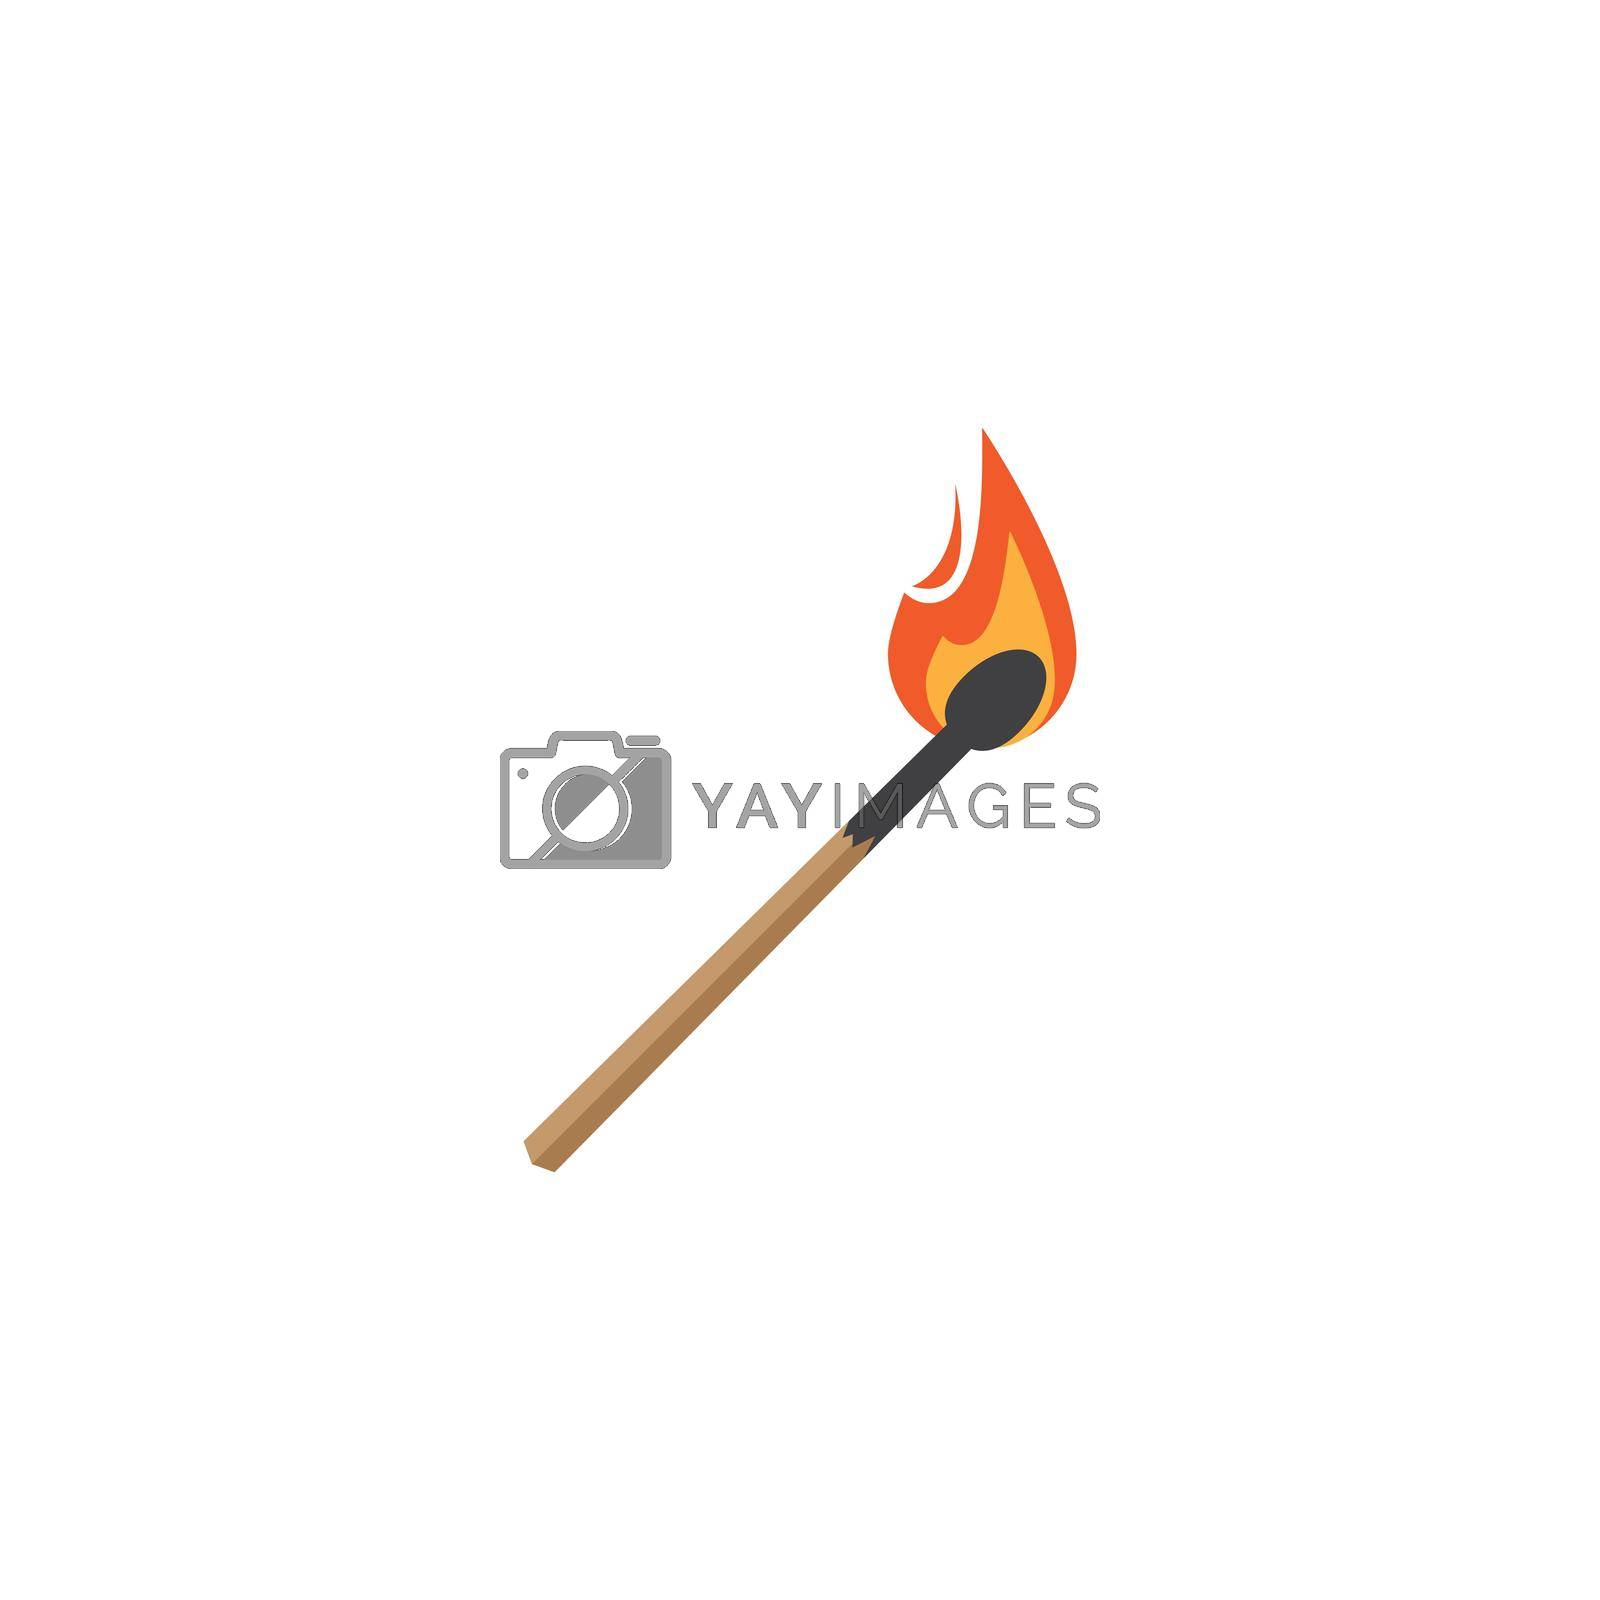 Royalty free image of Match burning illustration by awk